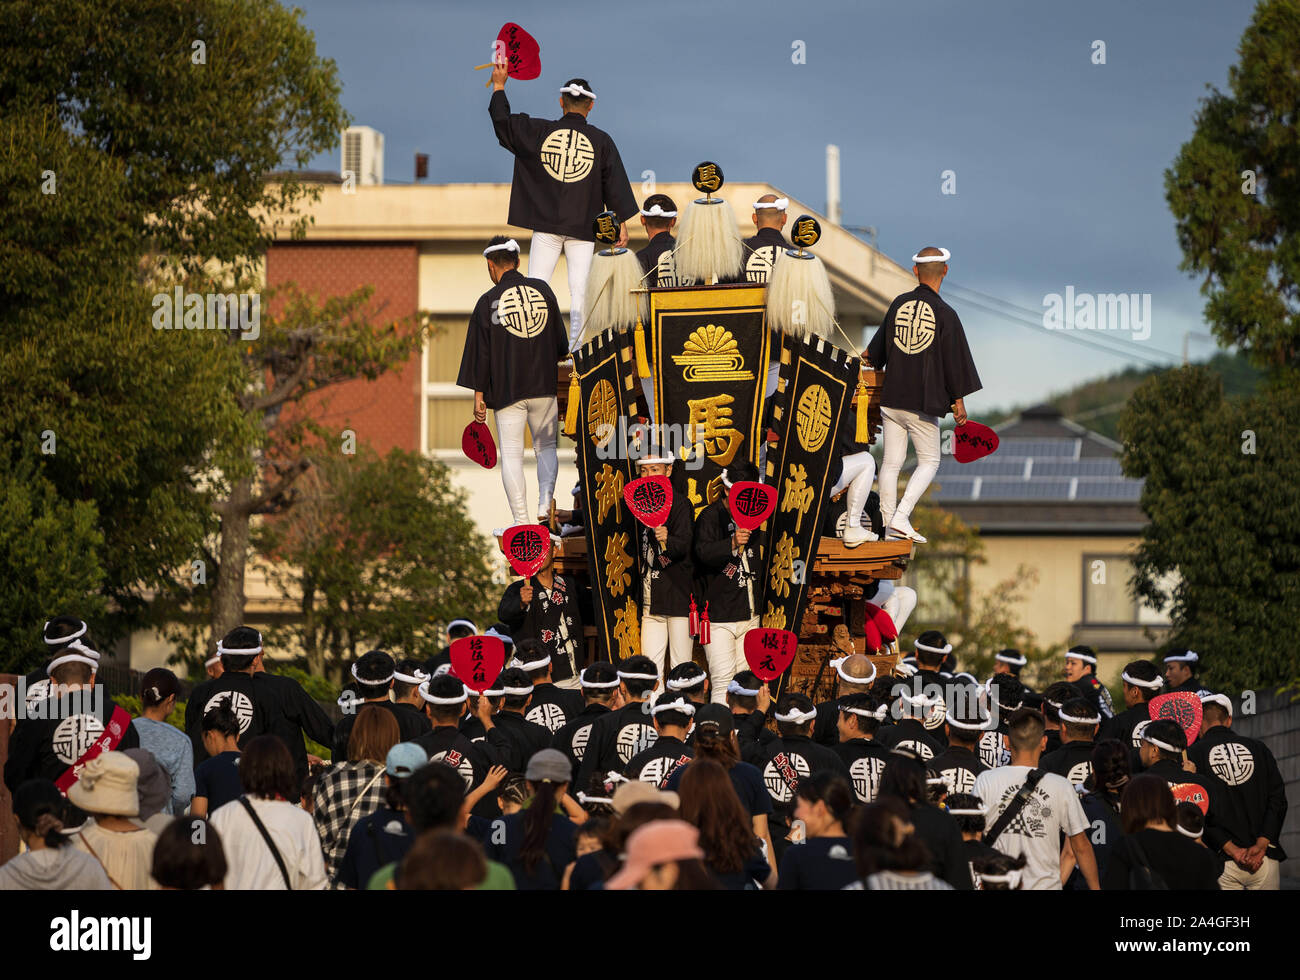 Kumatori, Japan - October 6, 2019: Local leaders atop wooden cart amid crowd at Japanese danjiri festival Stock Photo